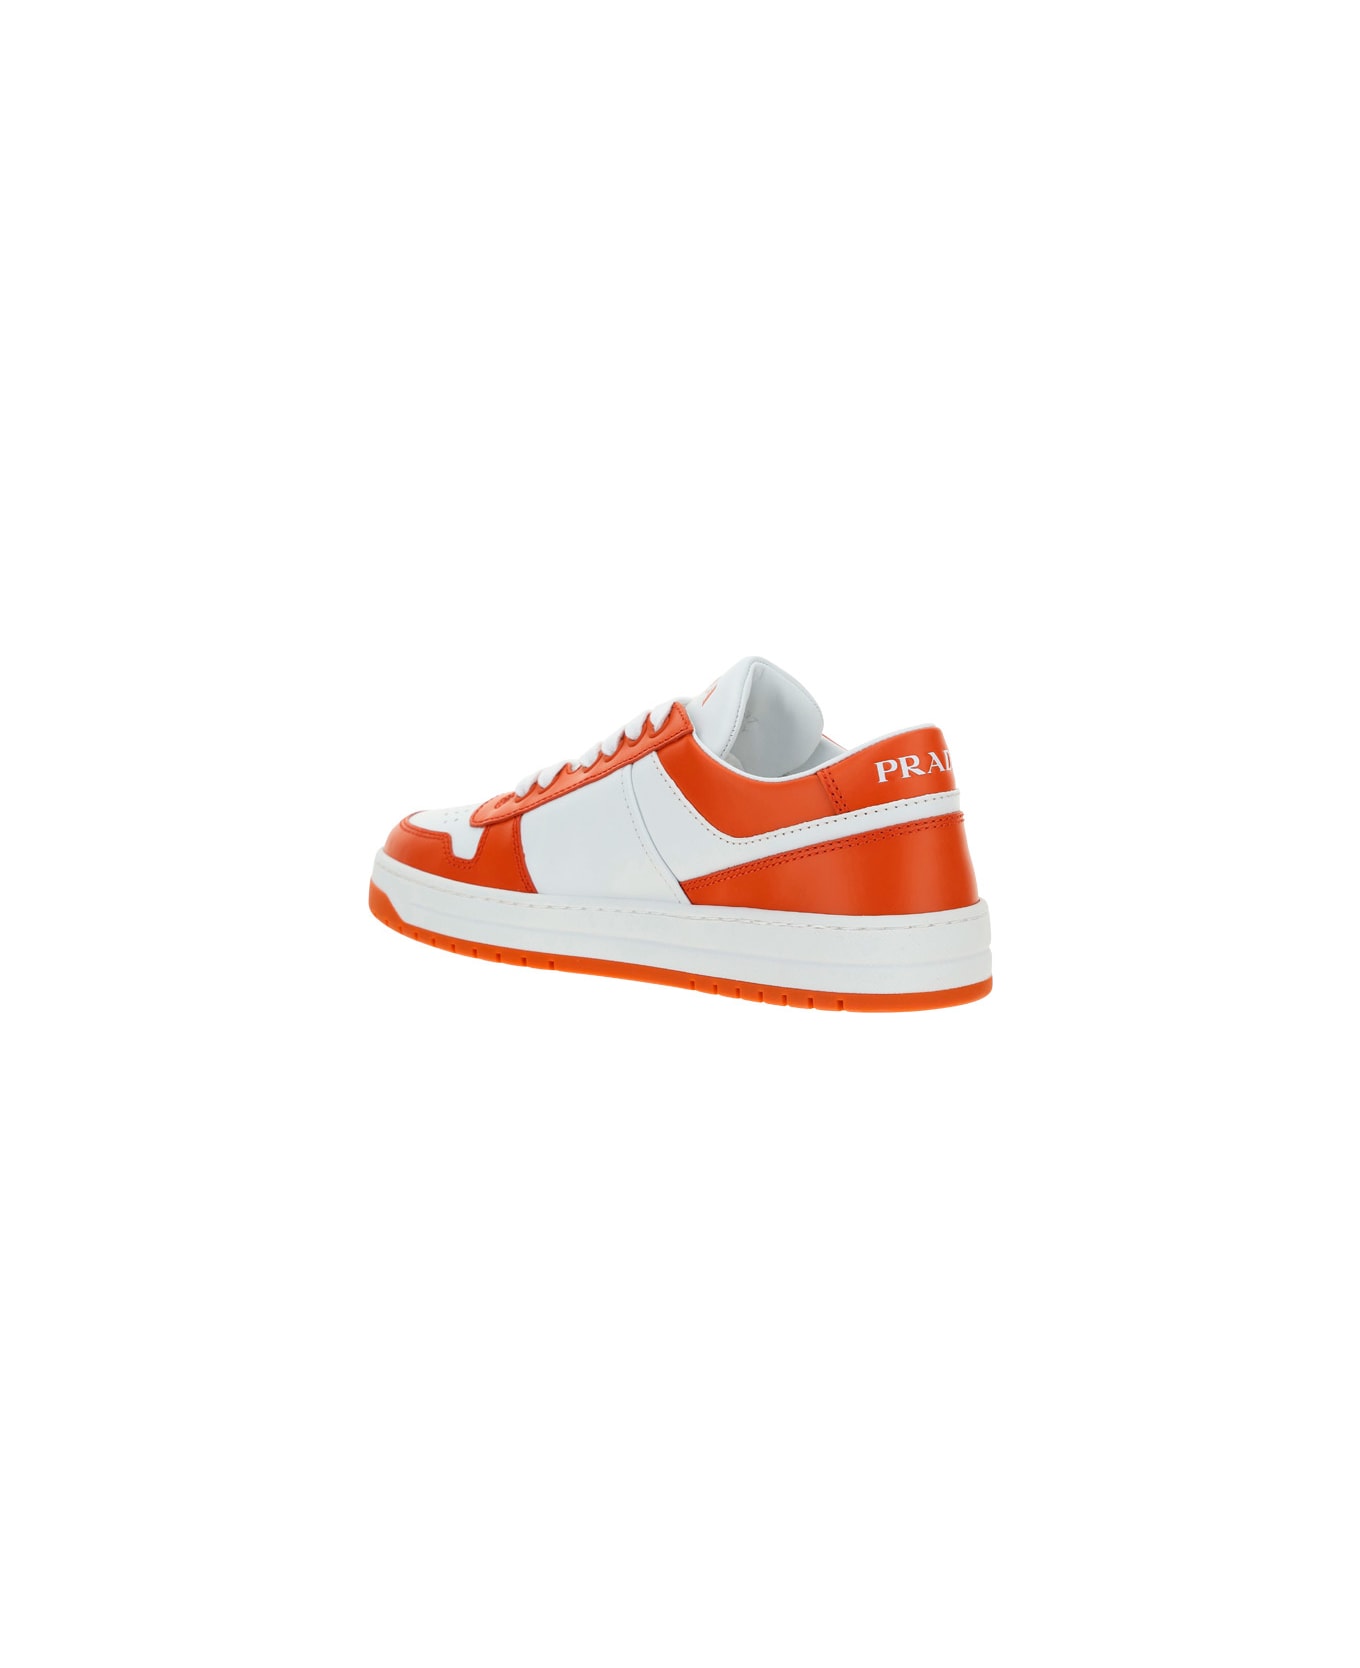 Prada Sneakers - Bianco+arancio